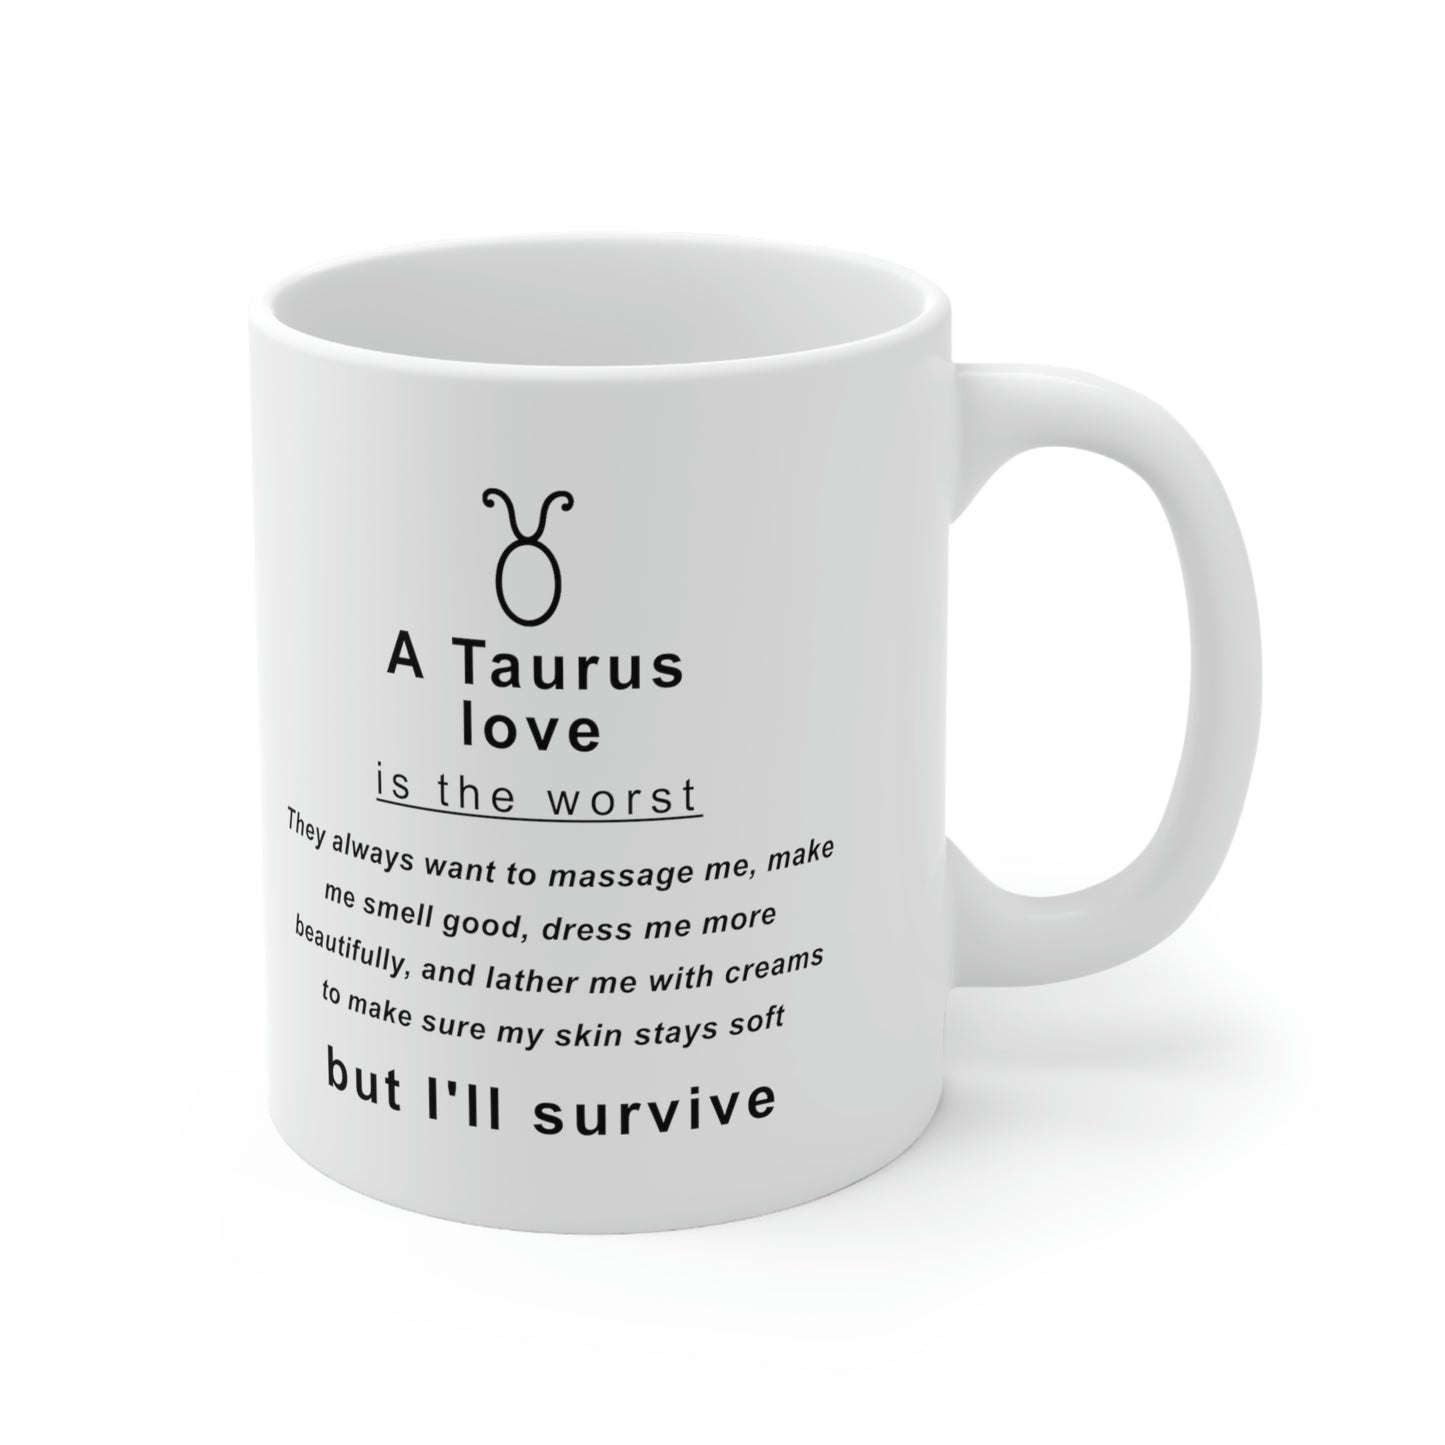 Taurus Mug: "Taurus Love is the Worst!" - full text in description